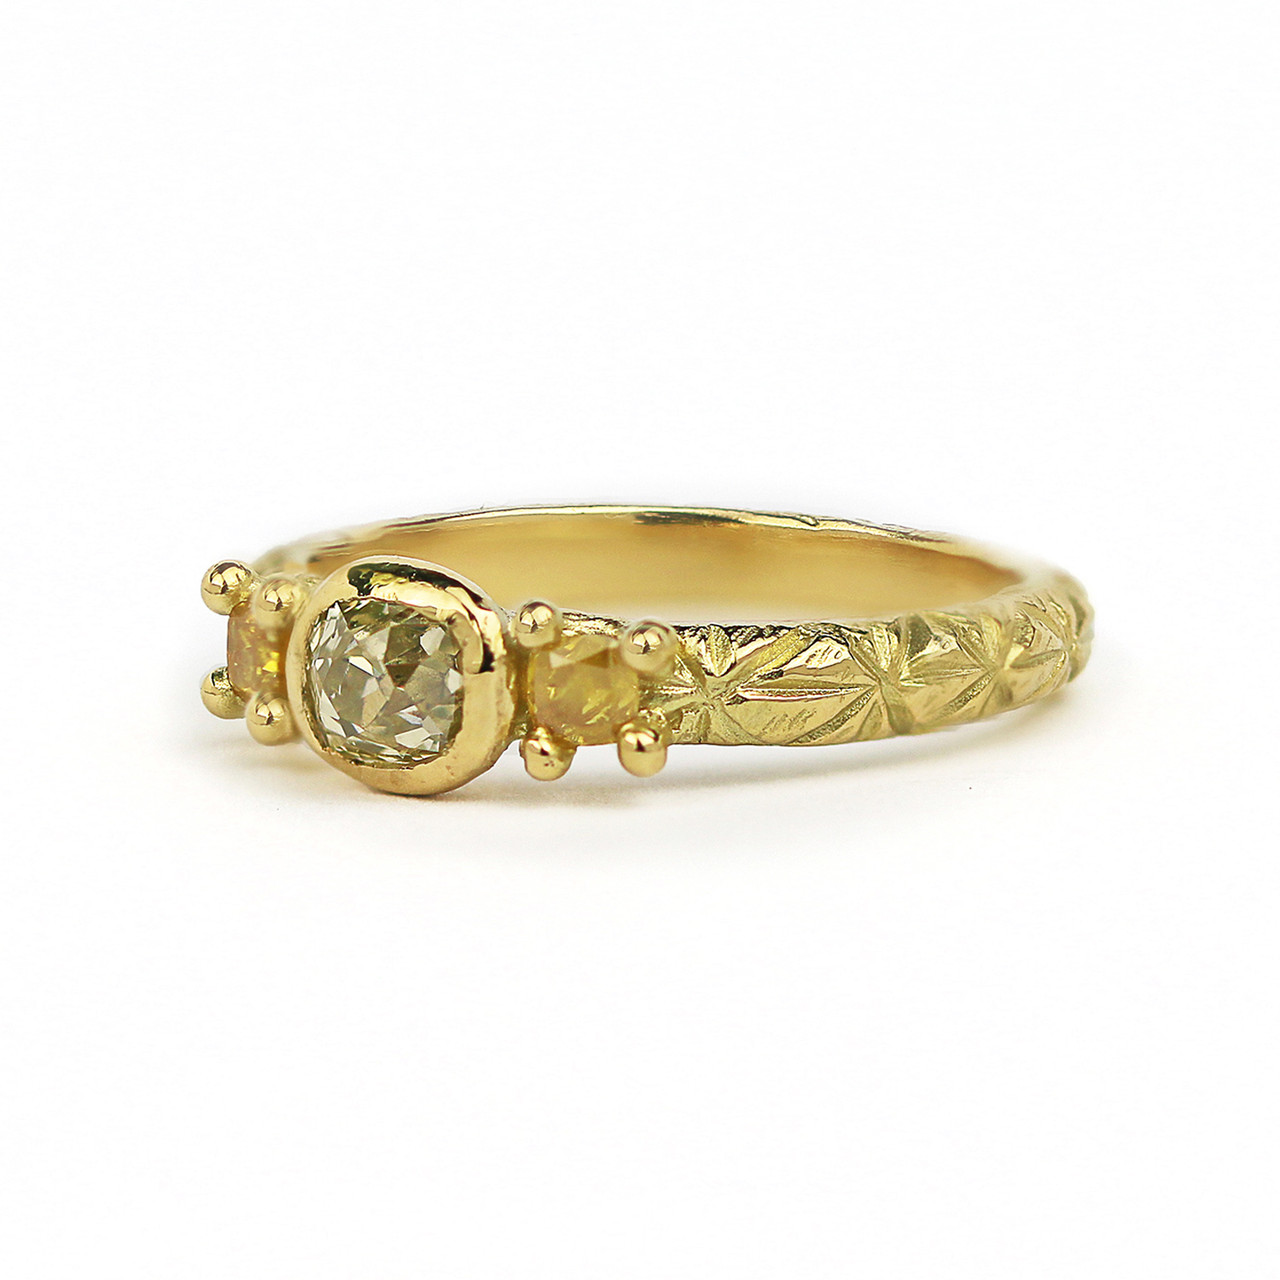 Yellow Diamond Old Cut Trilogy Ring, Ciara Bowles, tomfoolery